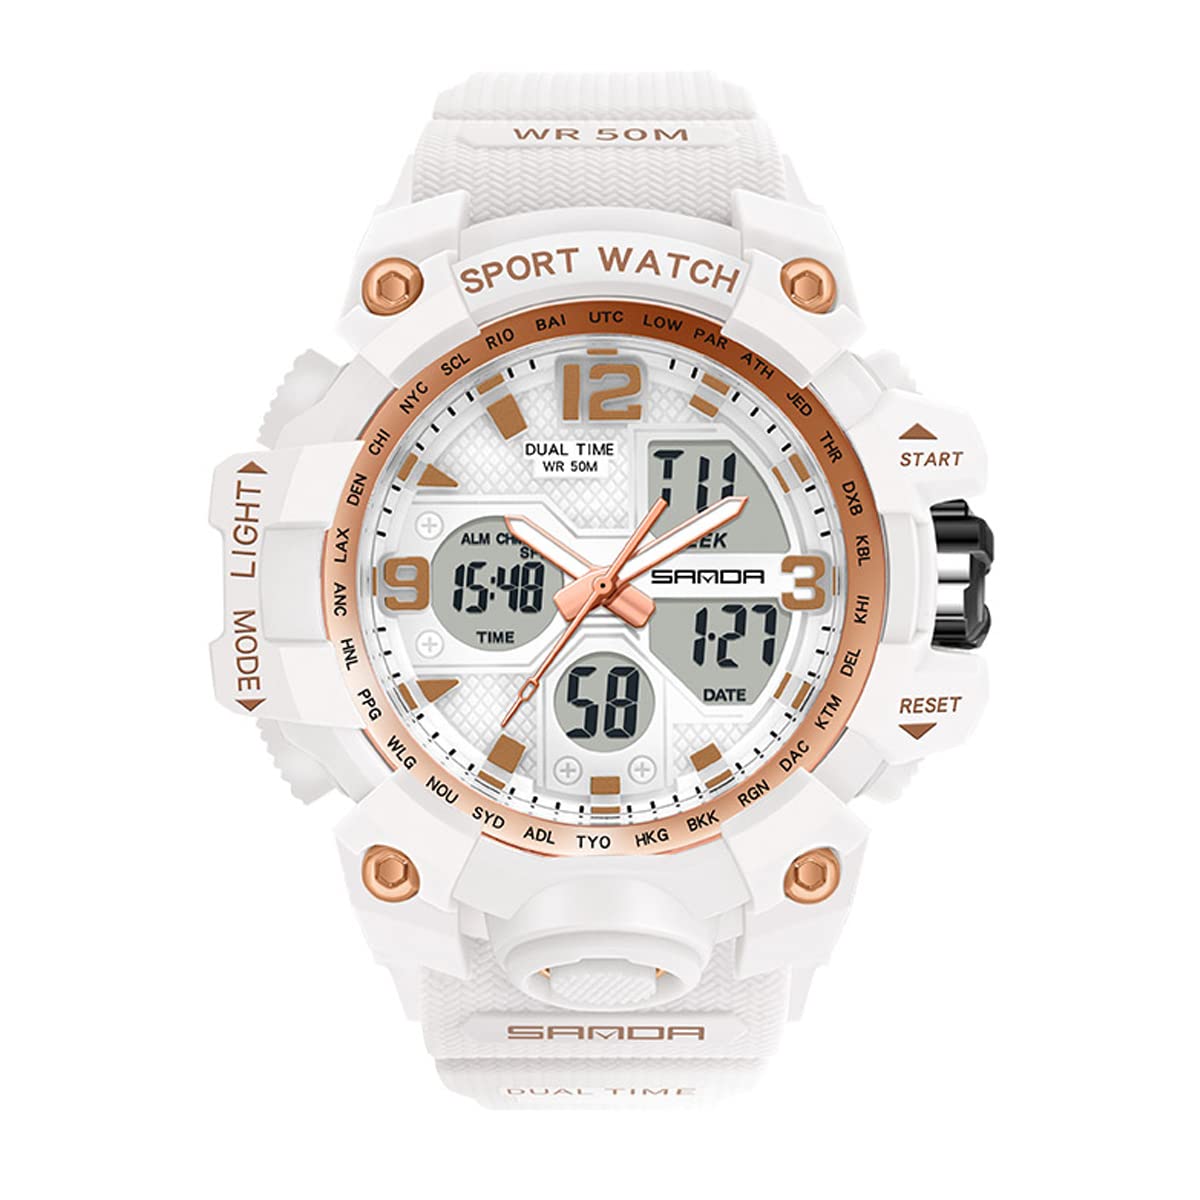 WISHFAN Women’s Digital Sports Watch, Dual-Display Waterproof Wrist Watch with Alarm and Stopwatch